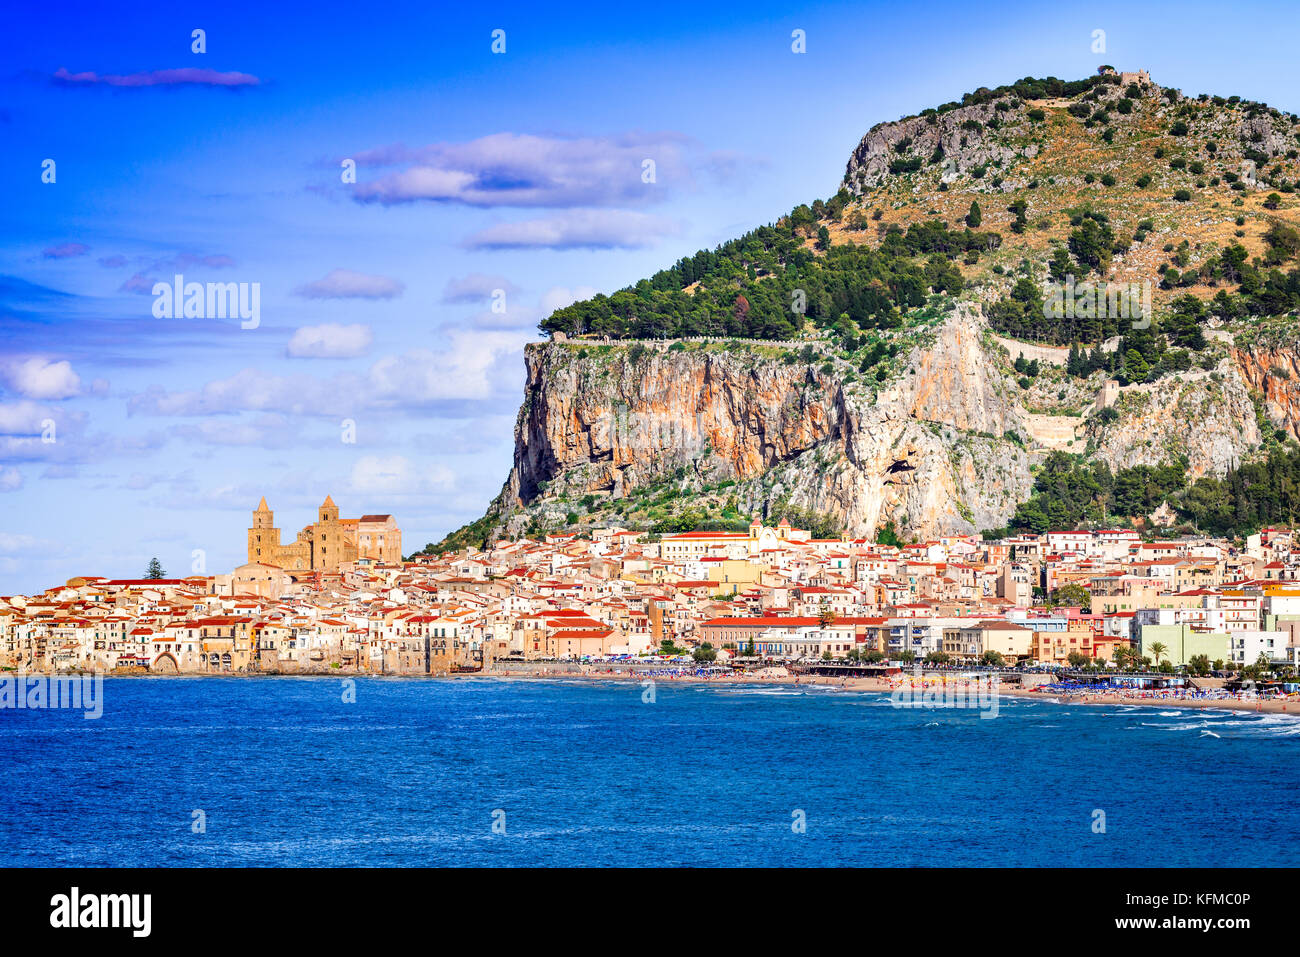 Cefalu, Sicily. Ligurian Sea and medieval sicilian city. Province of Palermo, Italy. Stock Photo